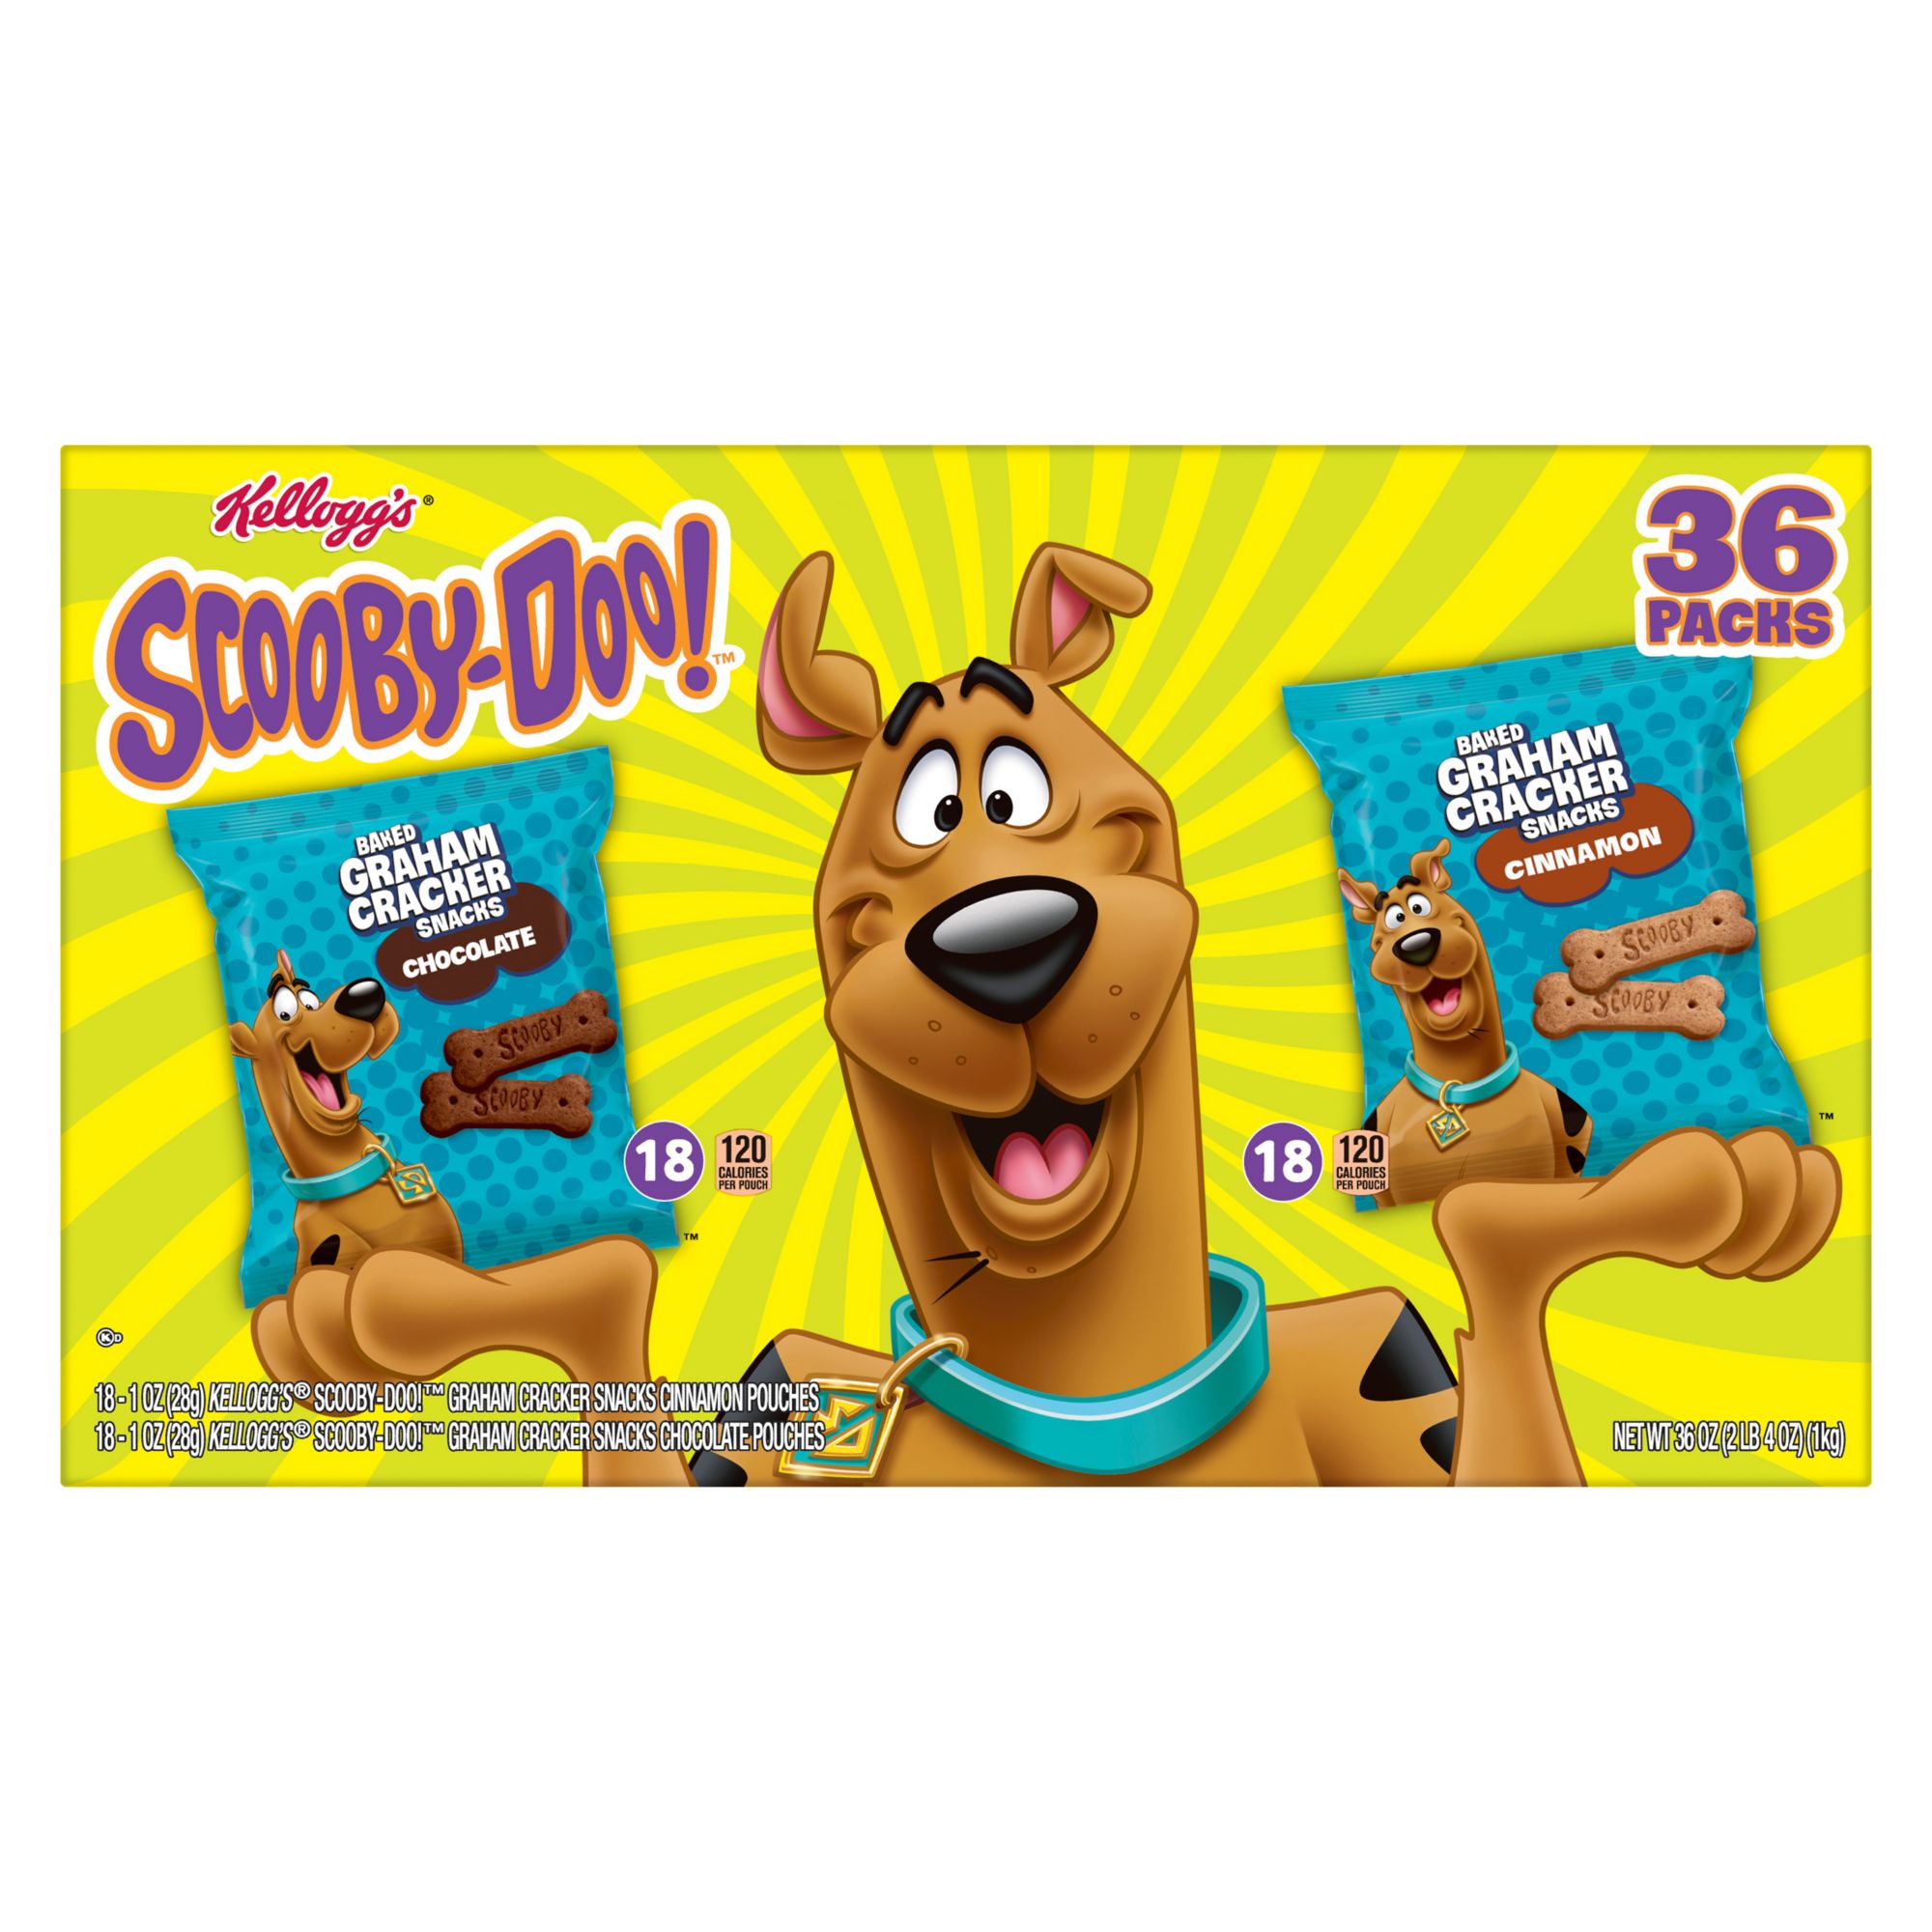 Scooby-Doo! Chocolate and Cinnamon Graham Cracker Variety Snack Packs, 36 pk.